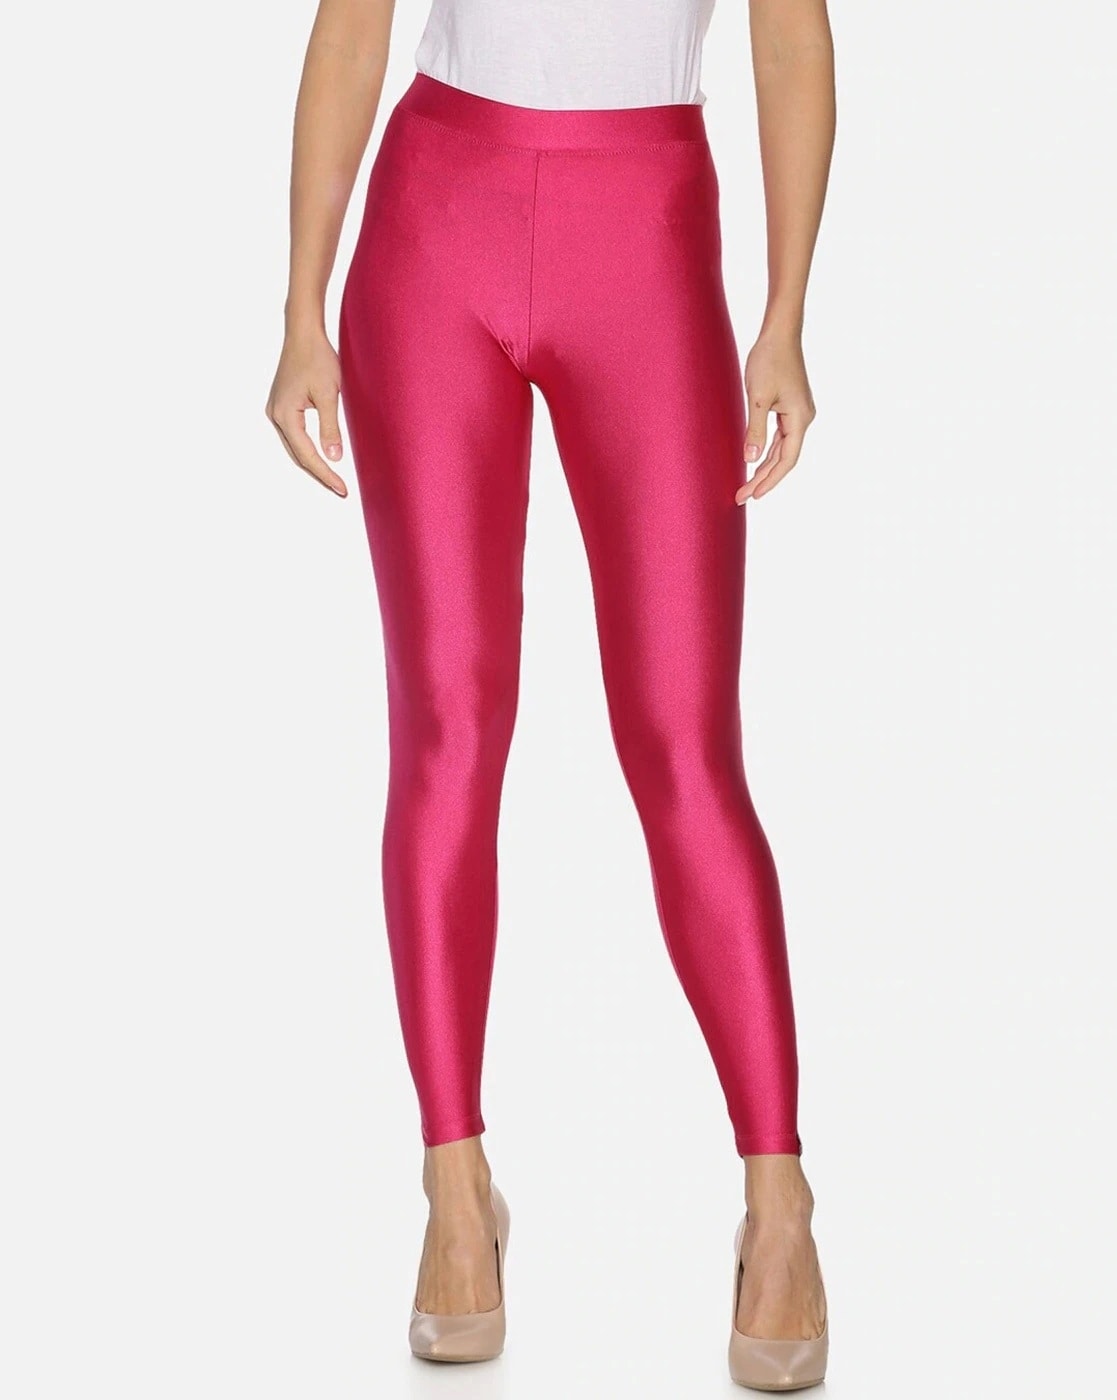 Buy TWIN BIRDS Women Pink Solid Nylon Shimmer Legging Online at